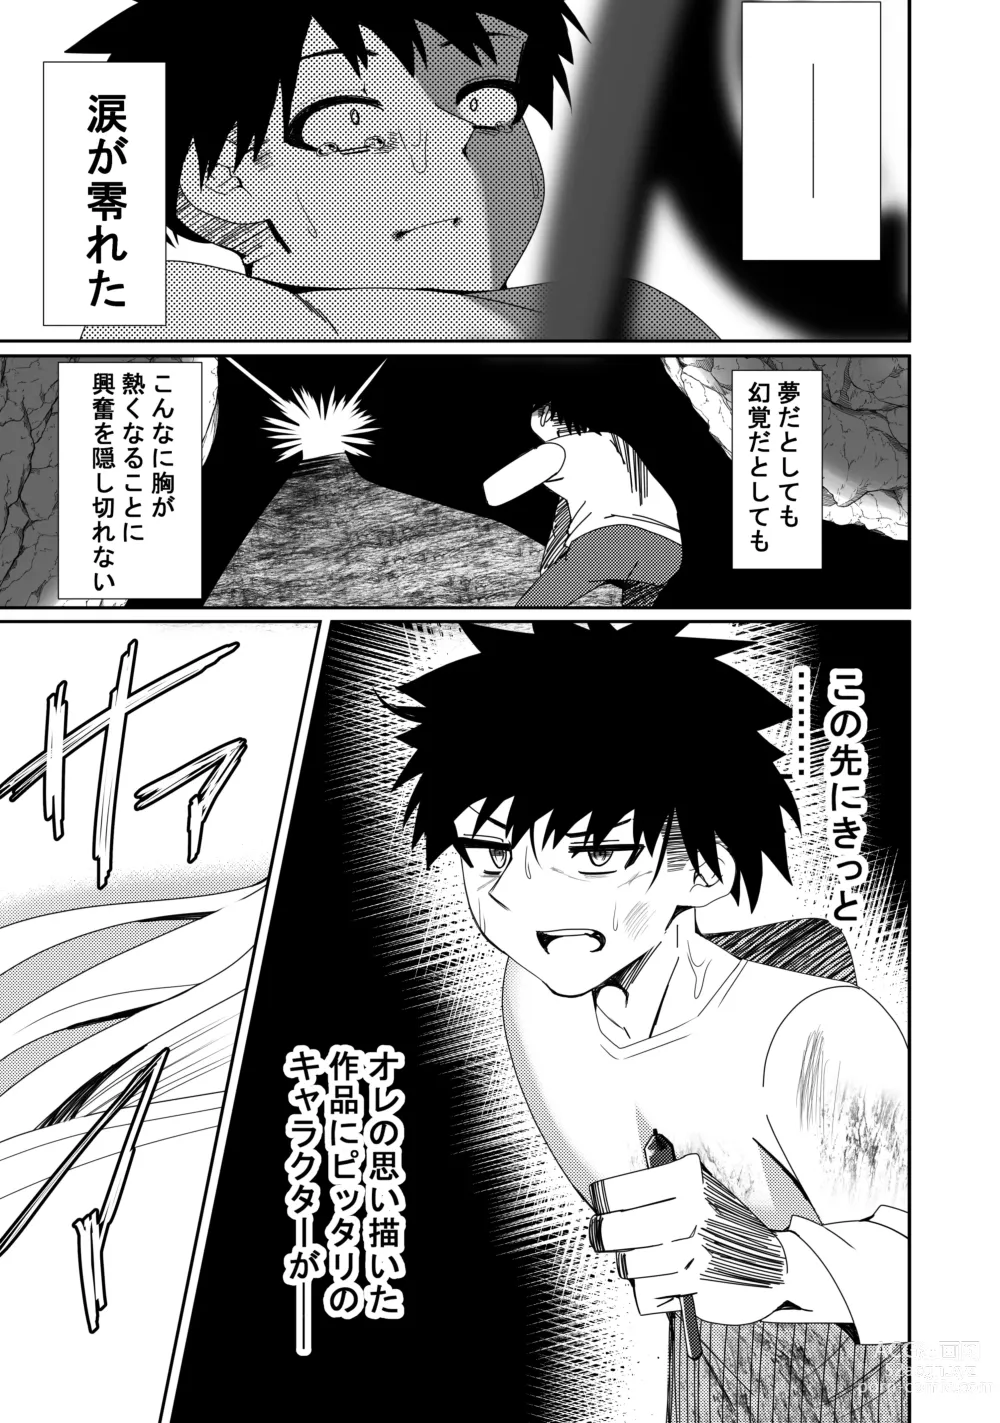 Page 27 of manga Junai Create Tokuten Manga